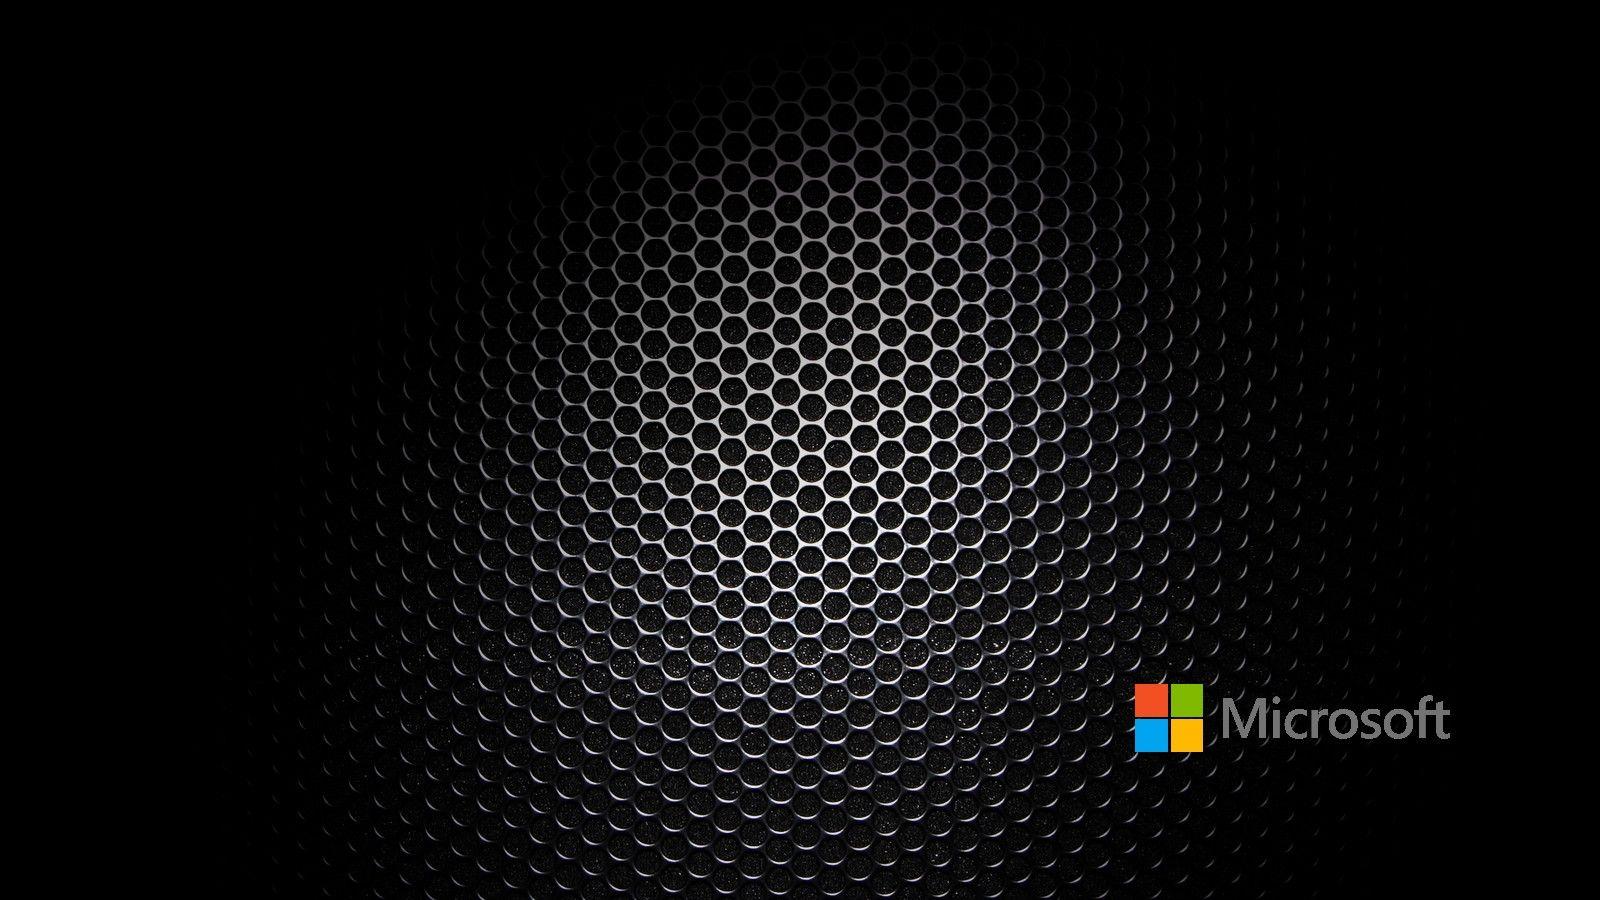 Hangi akıllı telefon Microsoft üçüncü ekran?